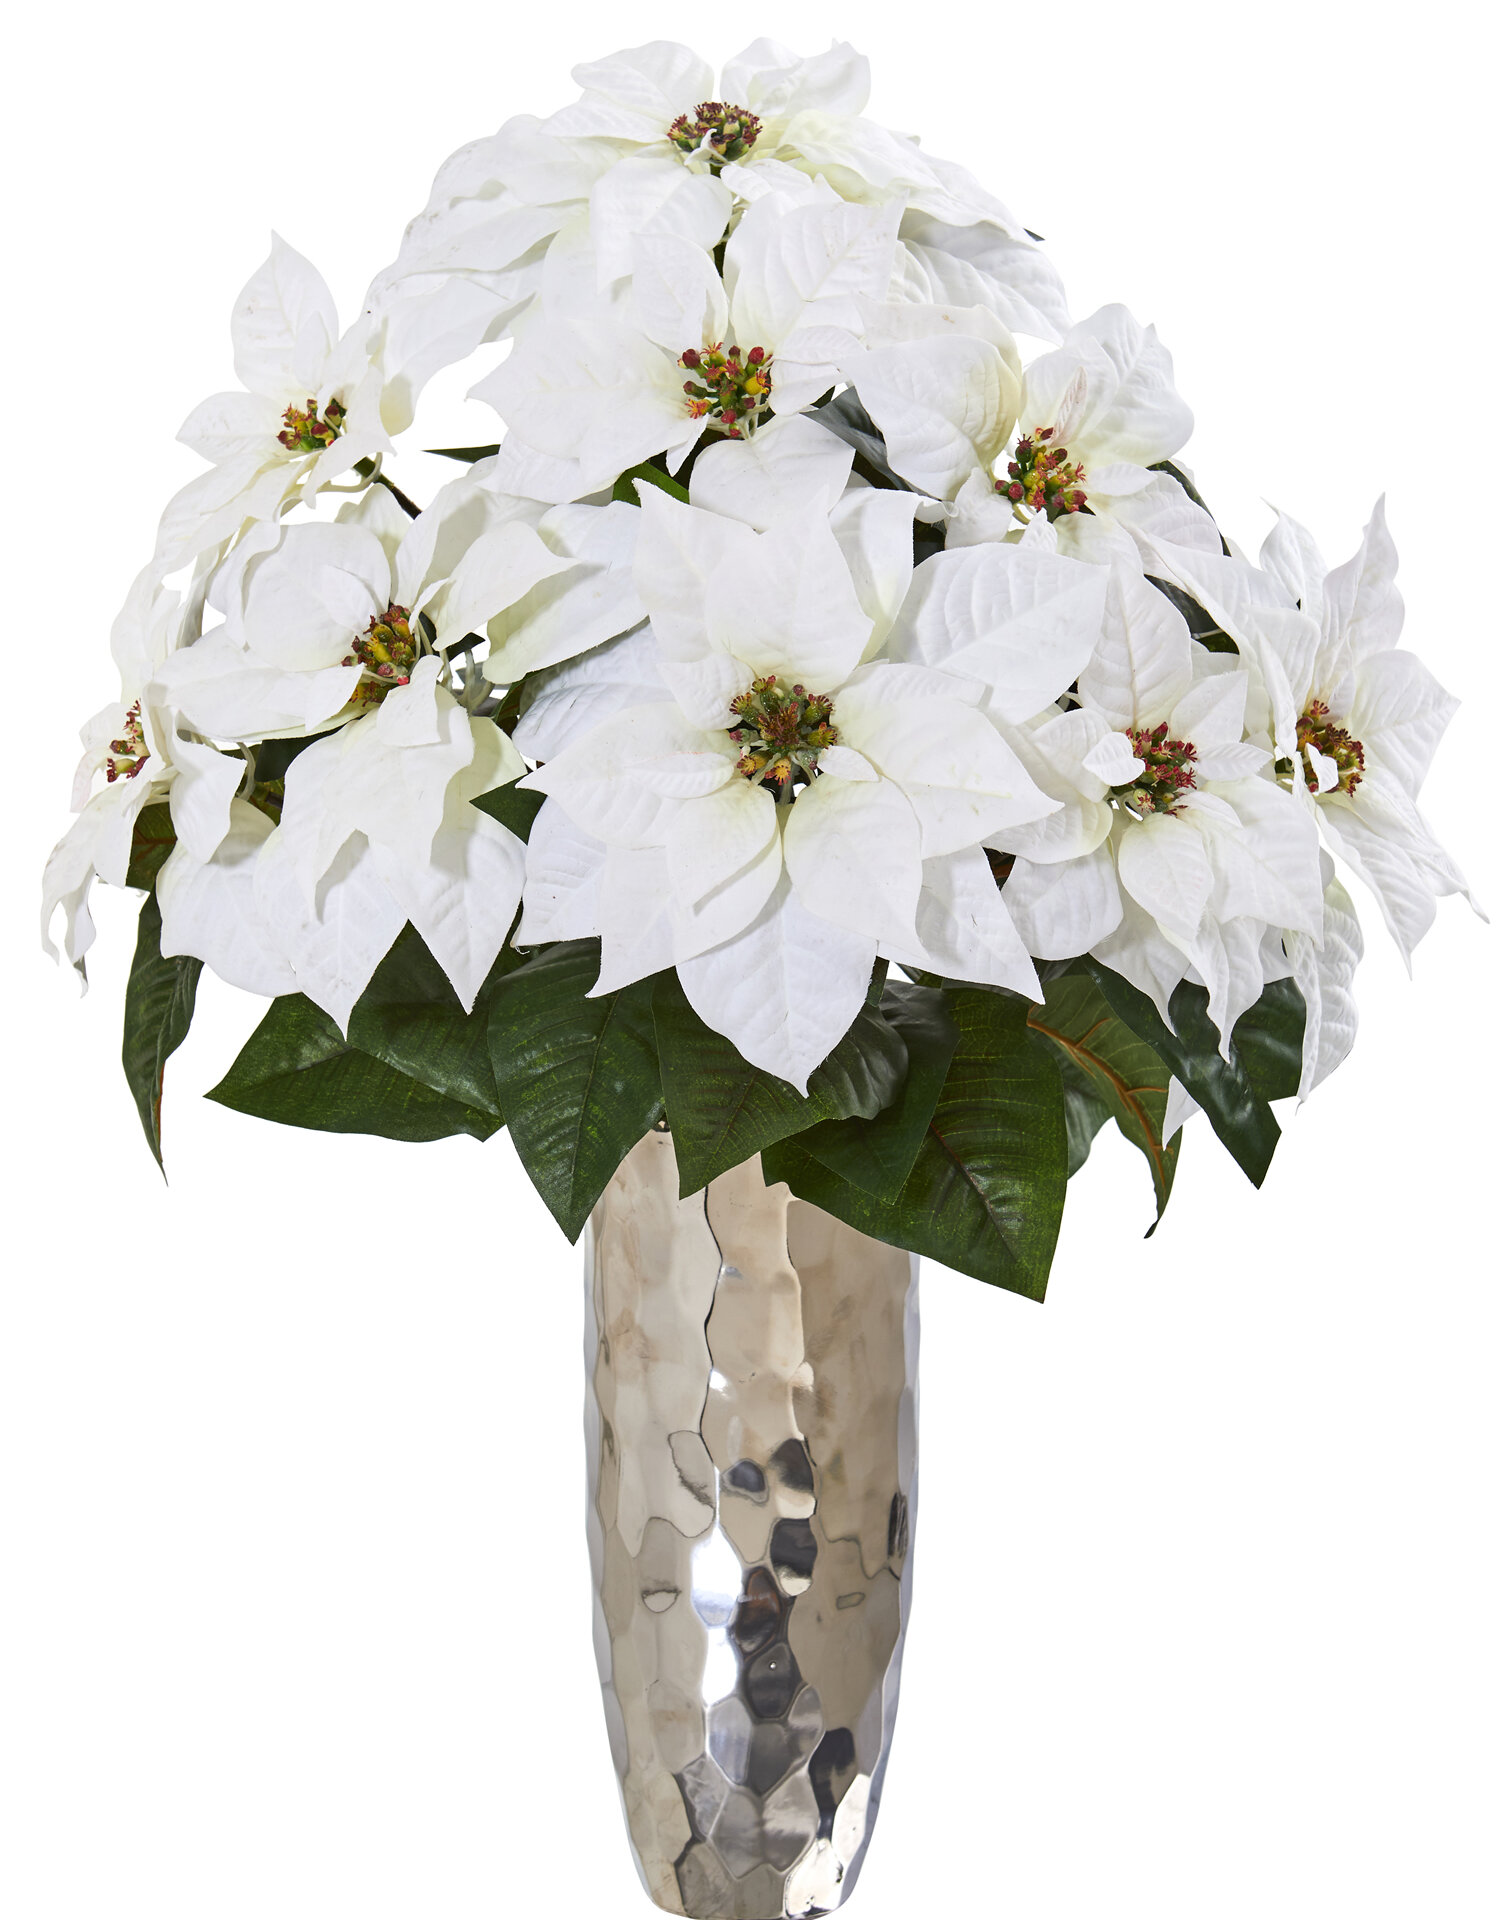 Featured image of post Artificial Flower Arrangements In Floor Vases : Colorful floral arrangement on a wooden floor.